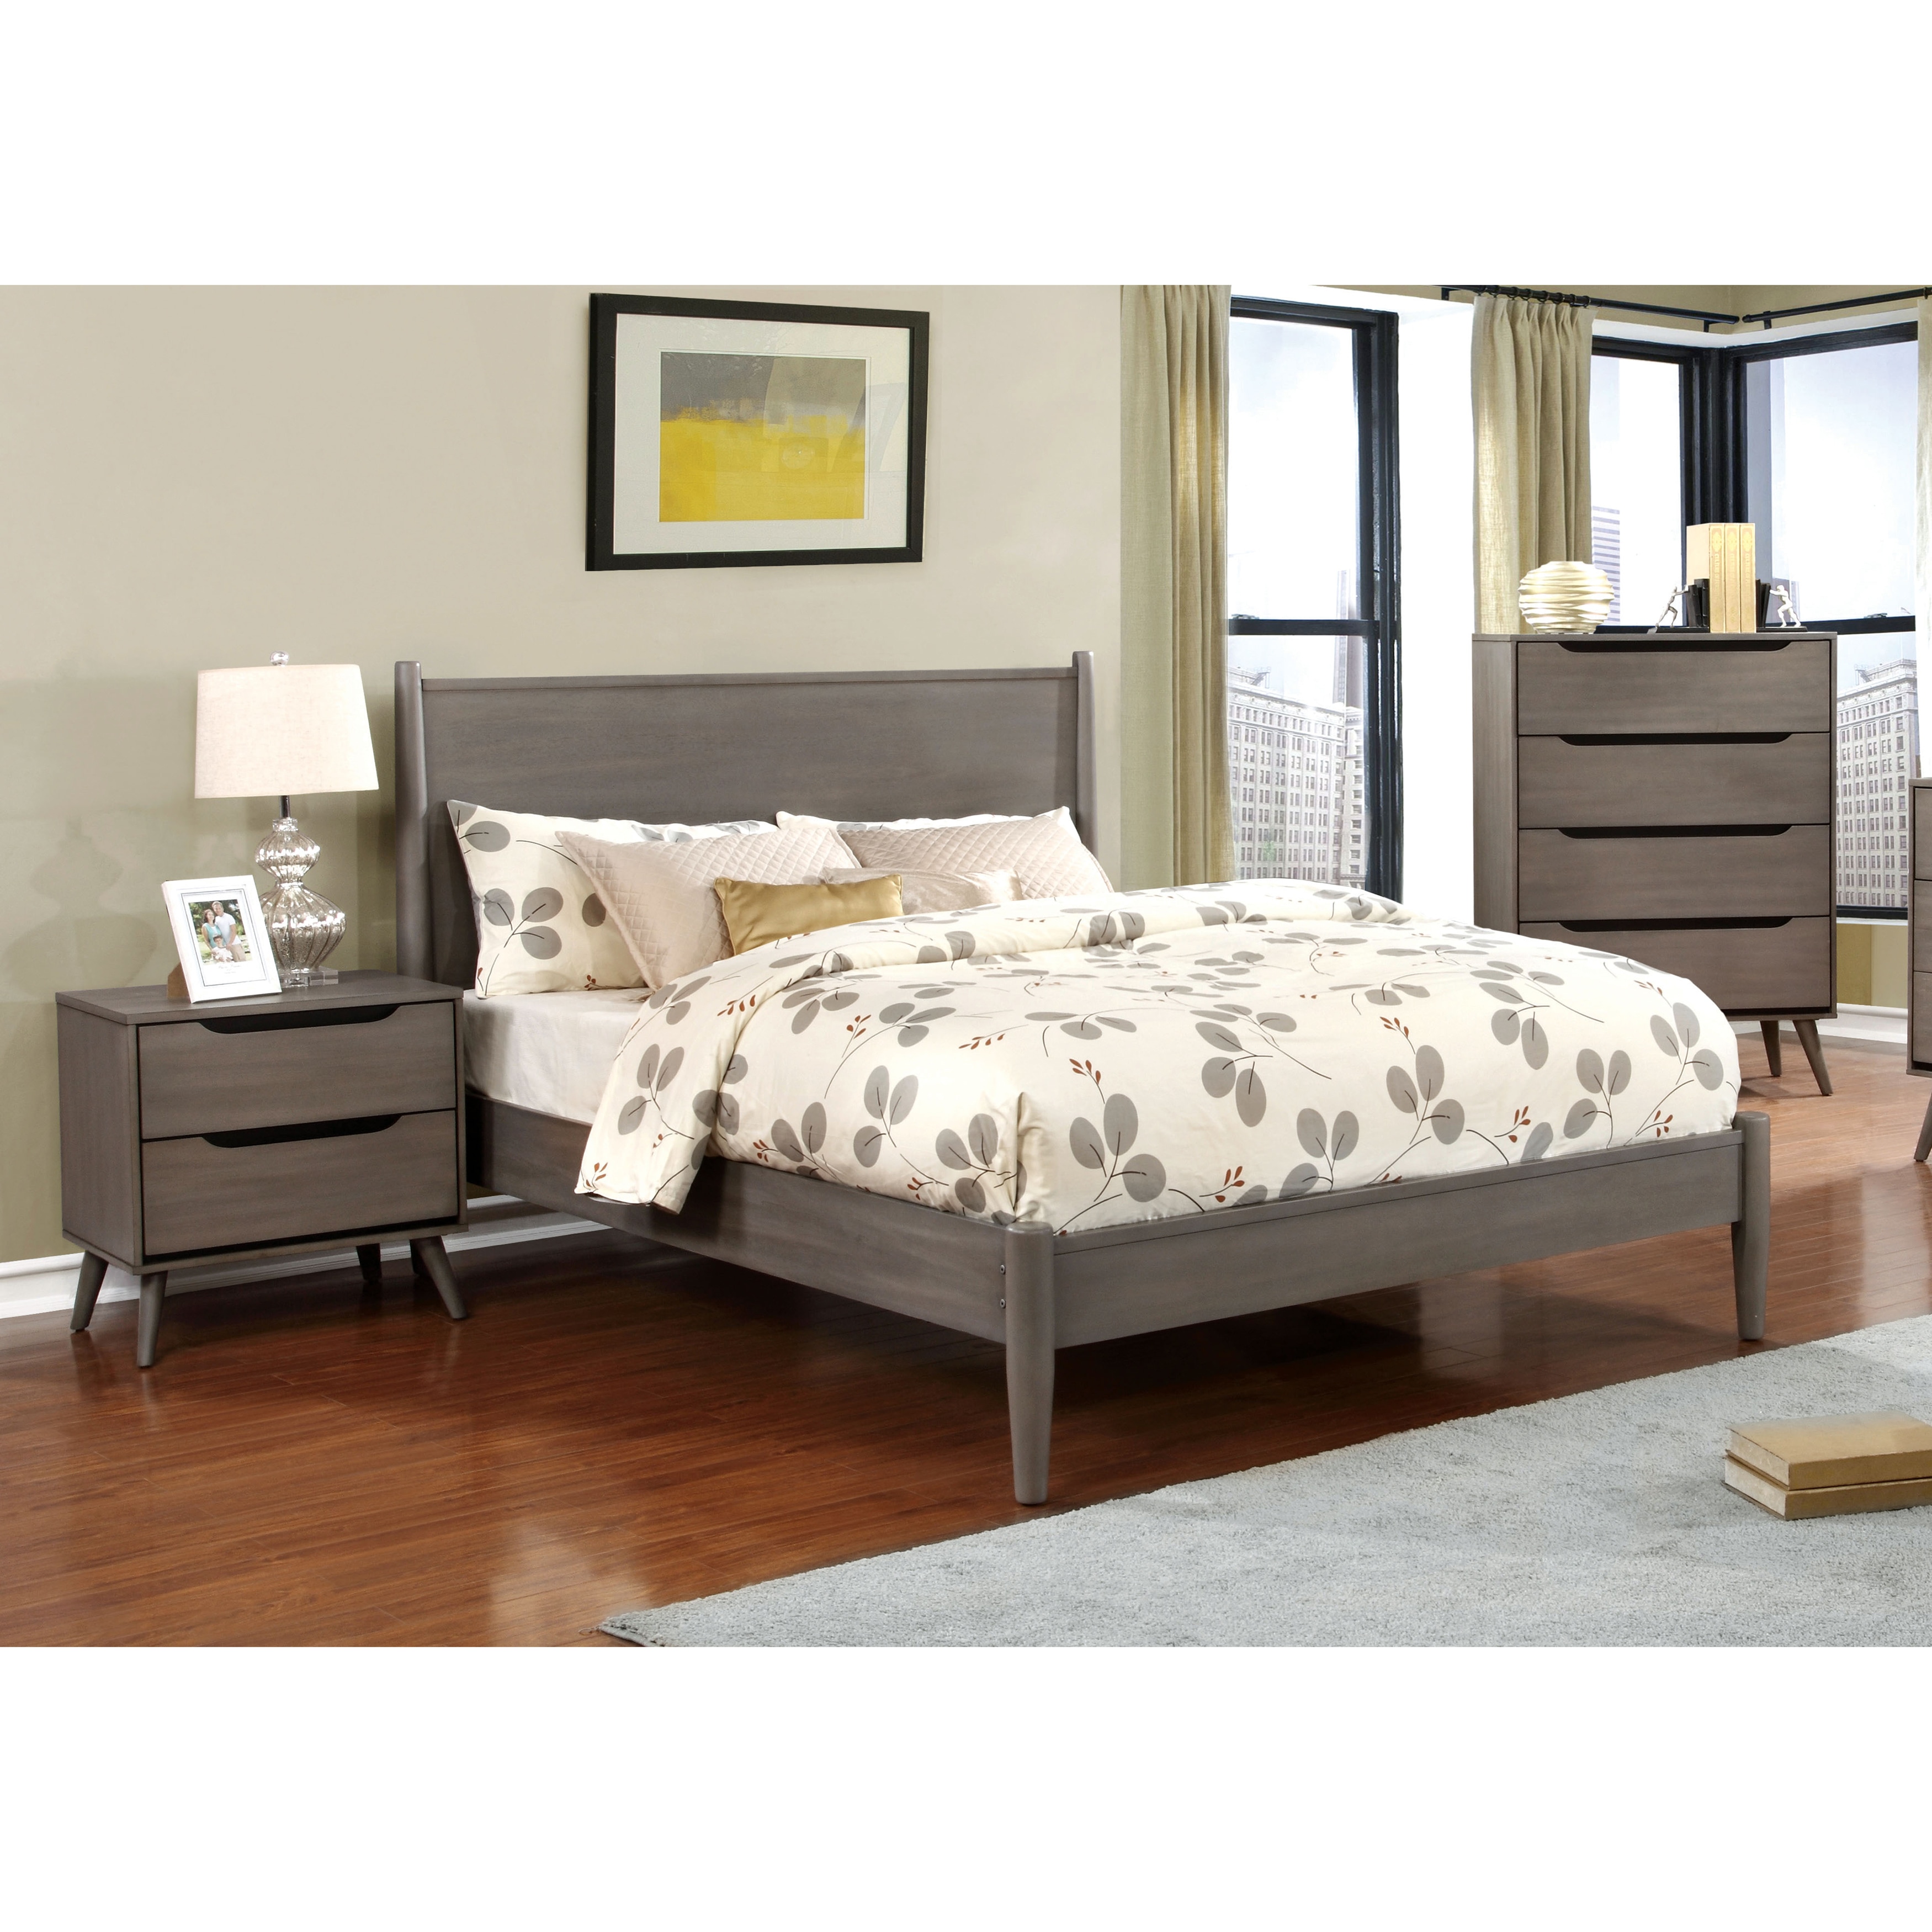 Carson Carrington Bodo Grey 3 Piece Mid Century Modern Bedroom Set Overstock 21895338